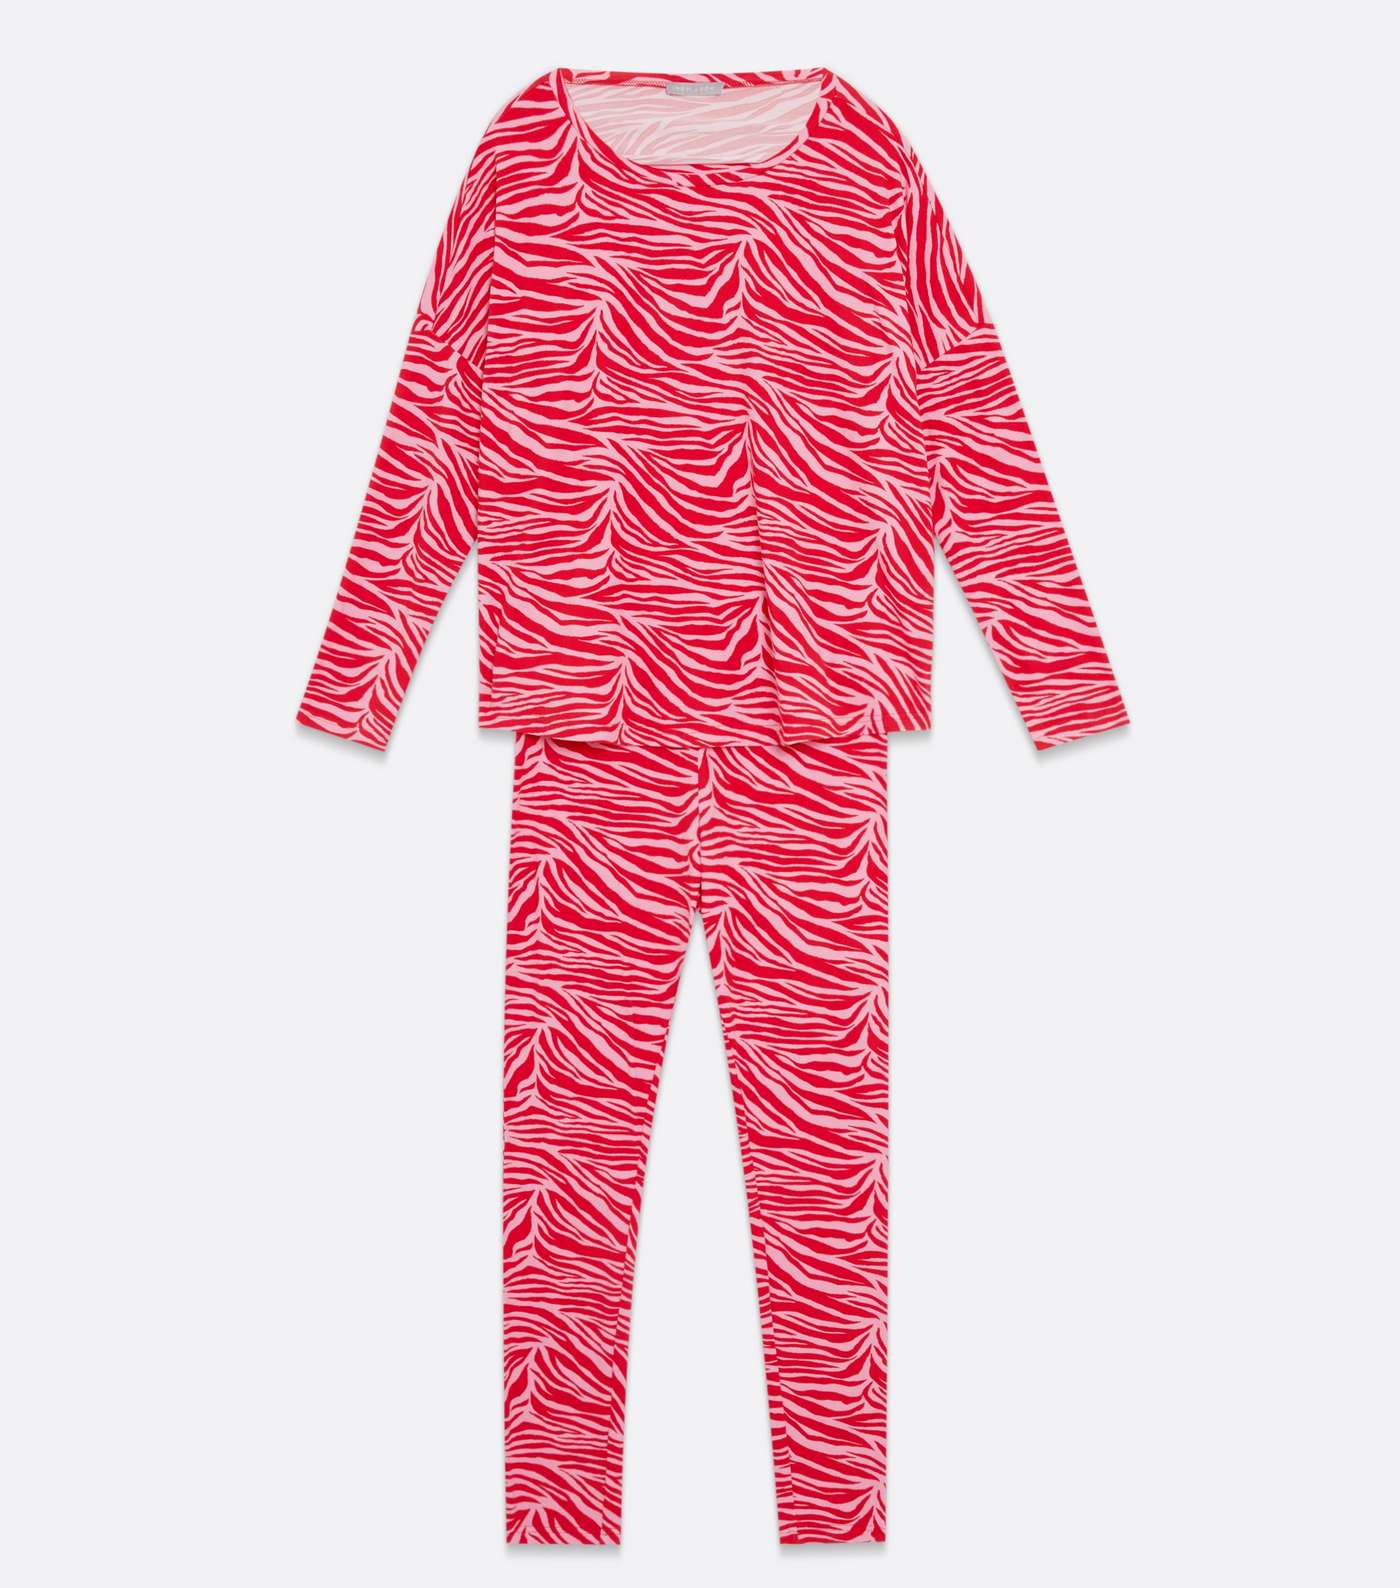 Red Zebra Print Soft Touch Legging Pyjama Set Image 5